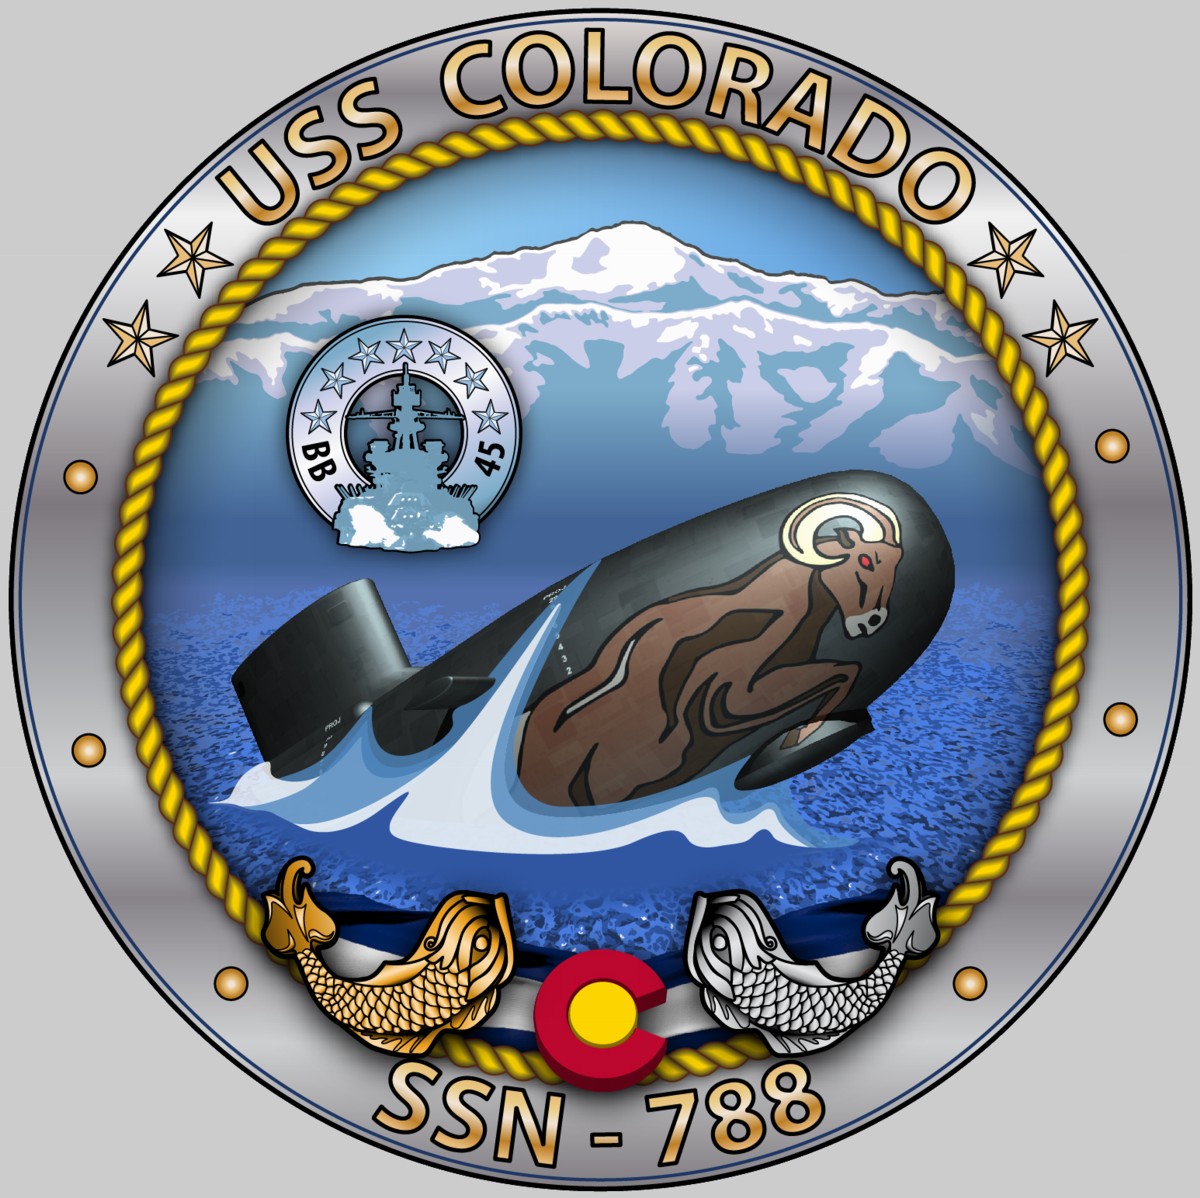 ssn-788 uss colorado insignia crest patch badge virginia class attack submarine us navy 03c